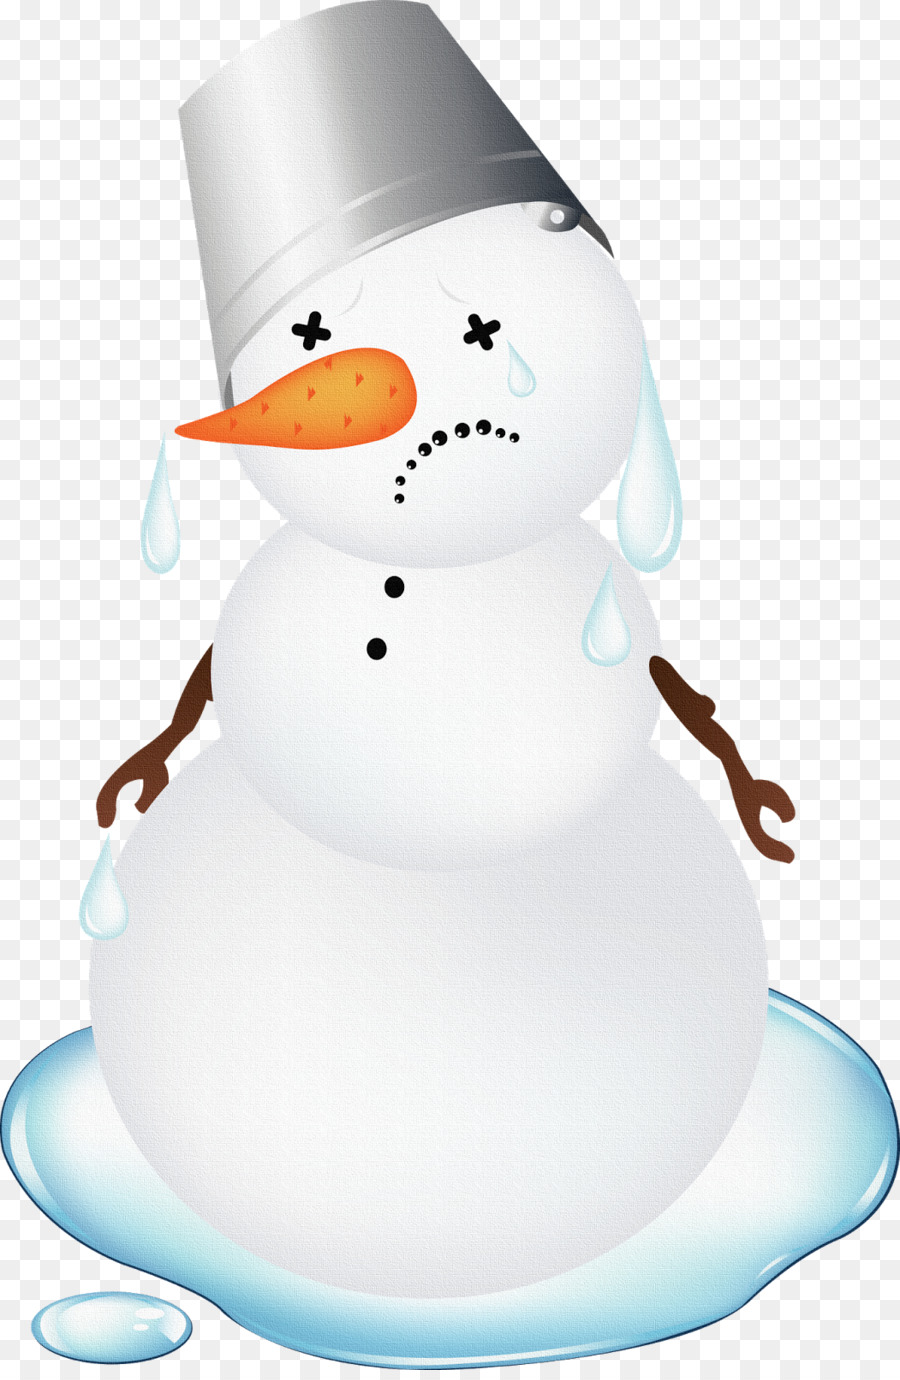 Snowman Melting Clip art - snowman png download - 1051*1600 - Free Transparent Snowman png Download.